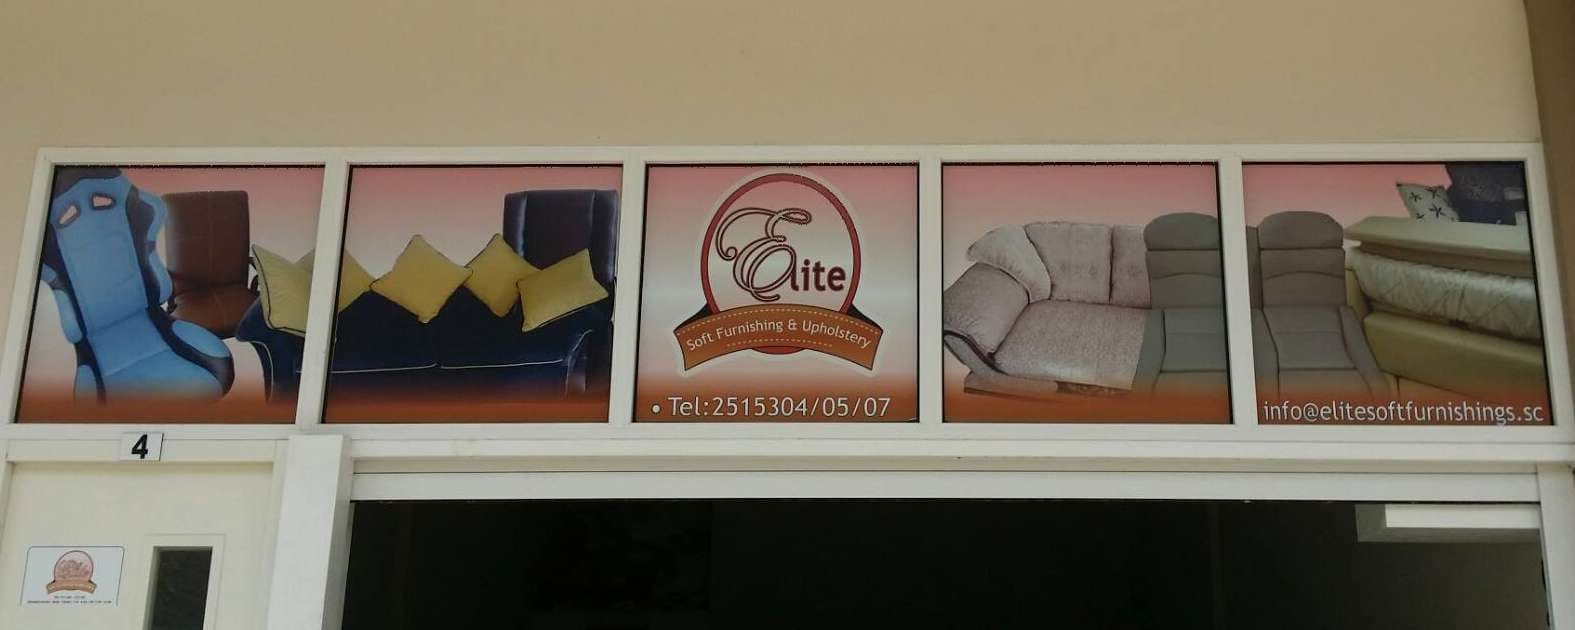 Elite Soft Furnishing & Upholstery